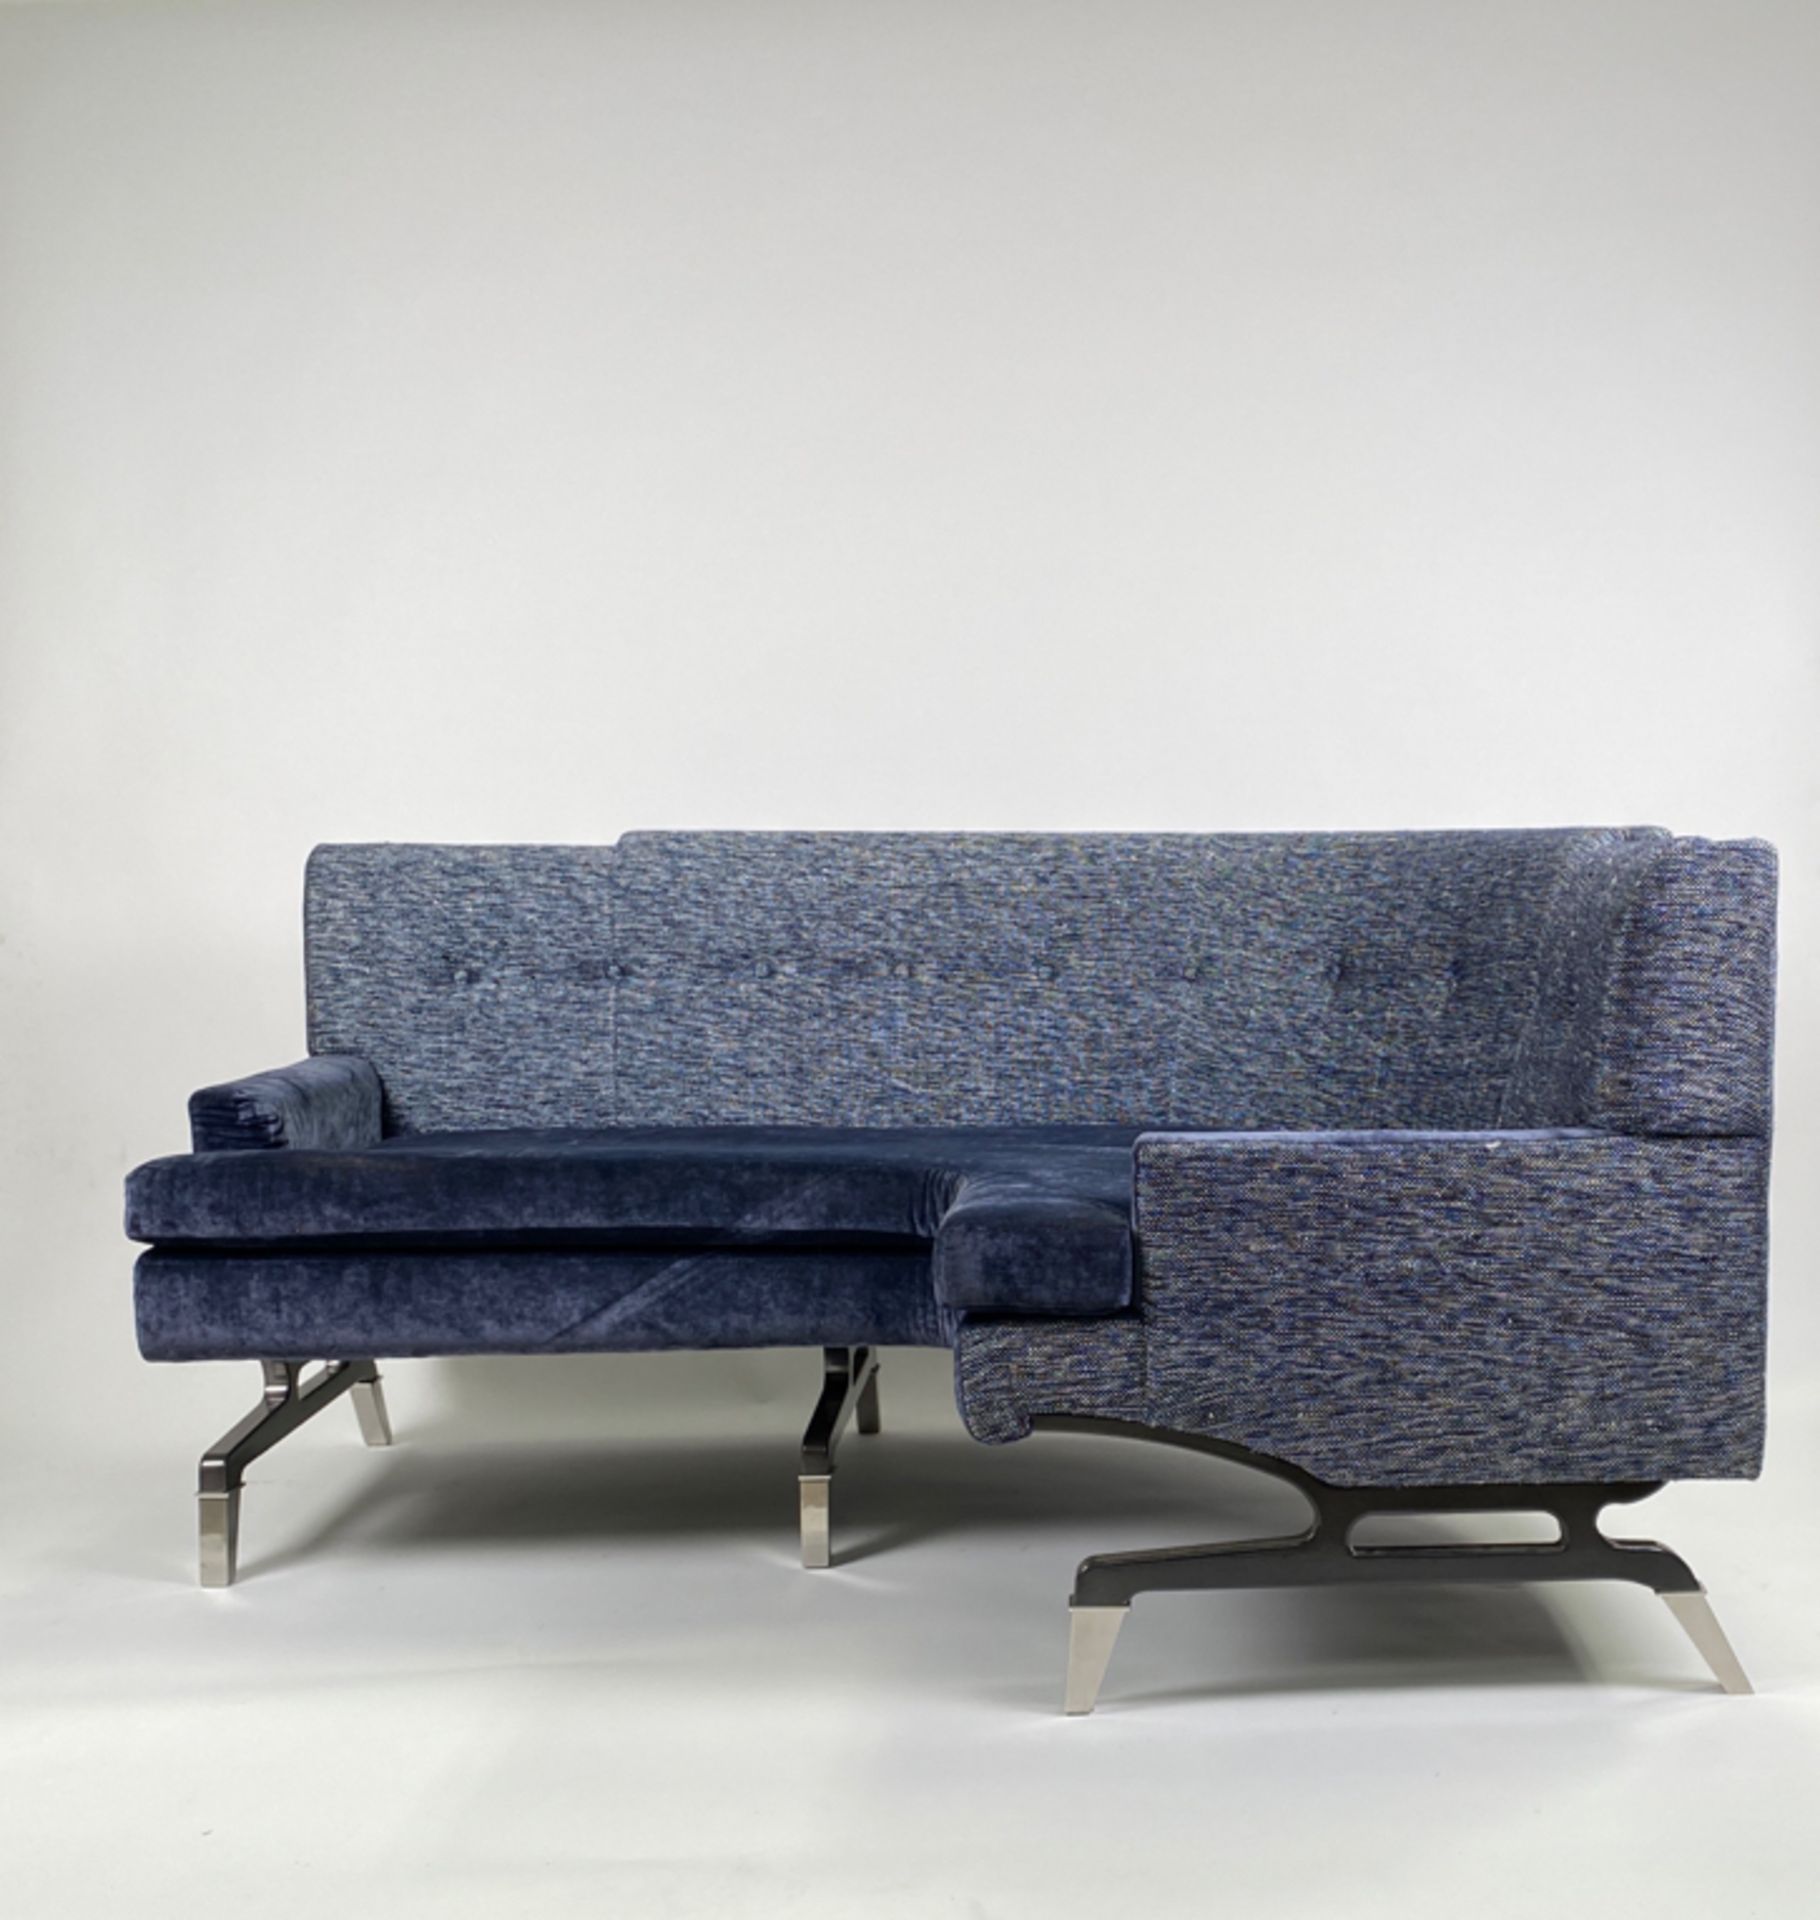 Bespoke Ben Whistler Sofa Made for The Berkeley Blue Bar